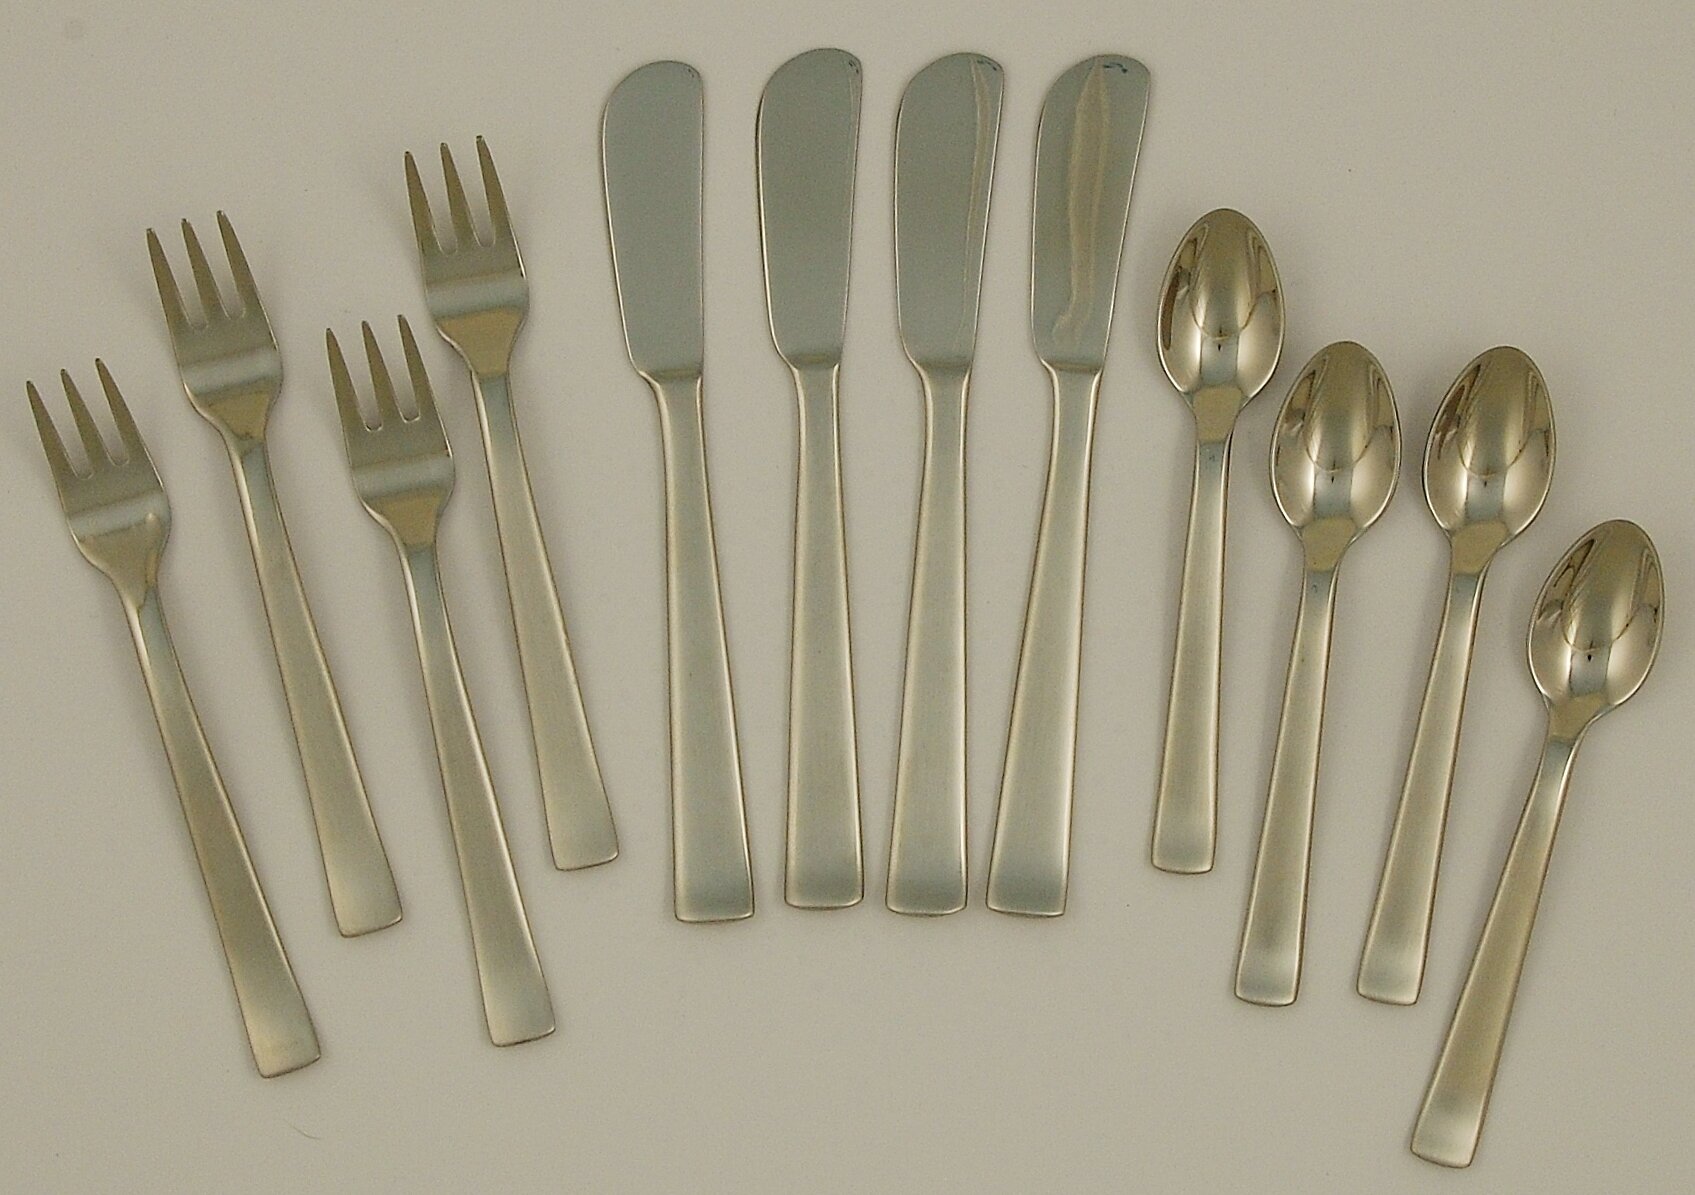 30 Pieces Silverware Set, KINGSTONE Flatware Cutlery Set for 6, 18/10  Stainless Steel Silverware Utensils Minimalist Design Dishwasher Safe